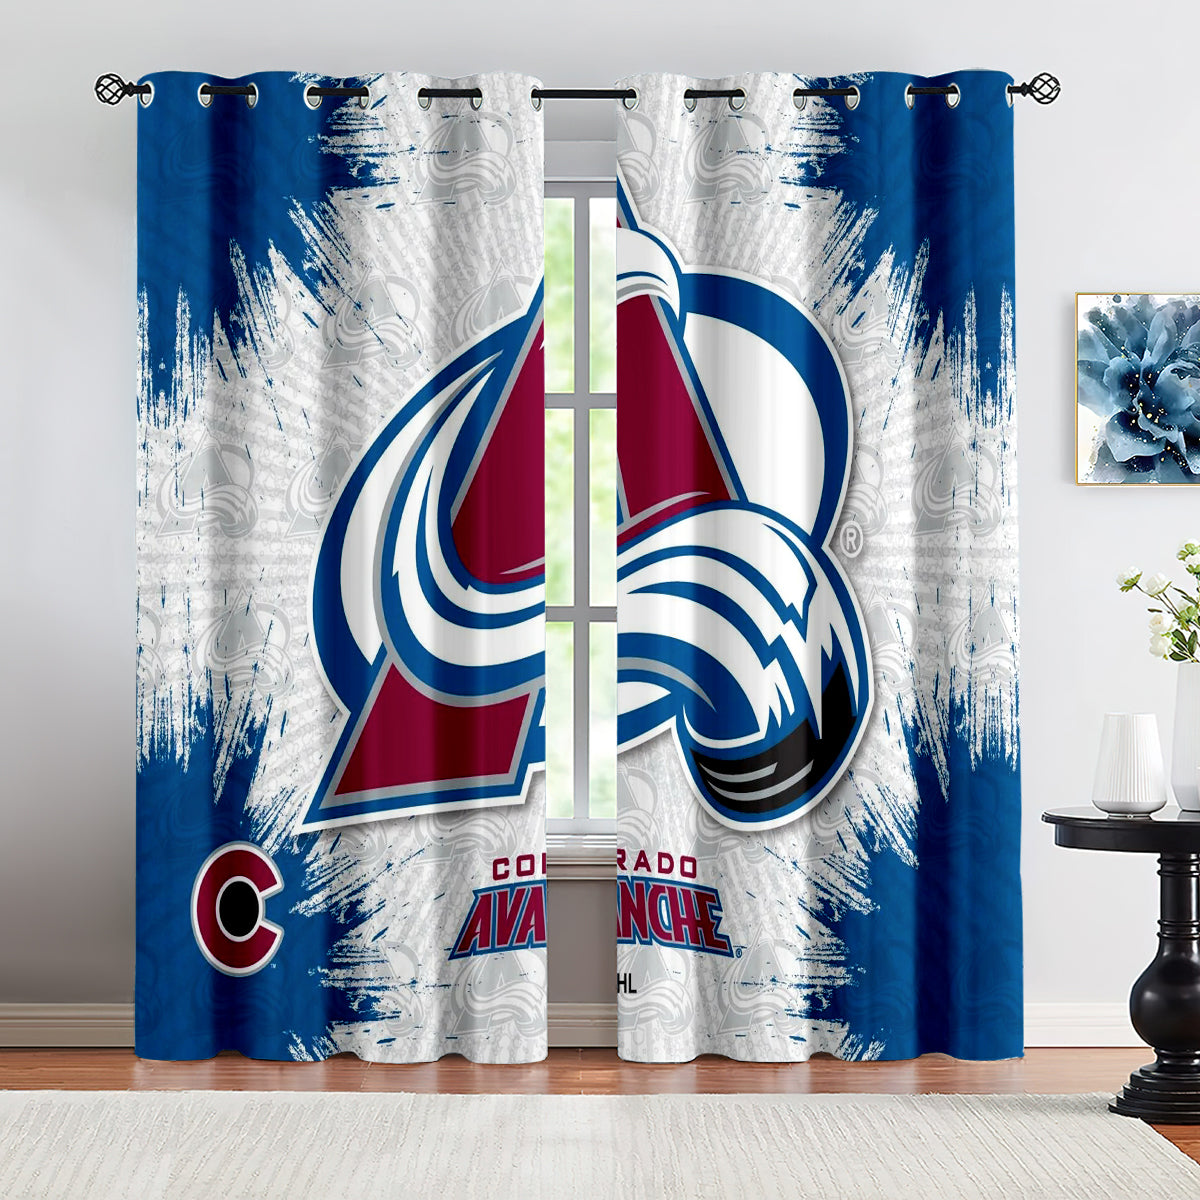 Colorado Avalanche Hockey League Blackout Curtains Drapes For Window Treatment Set